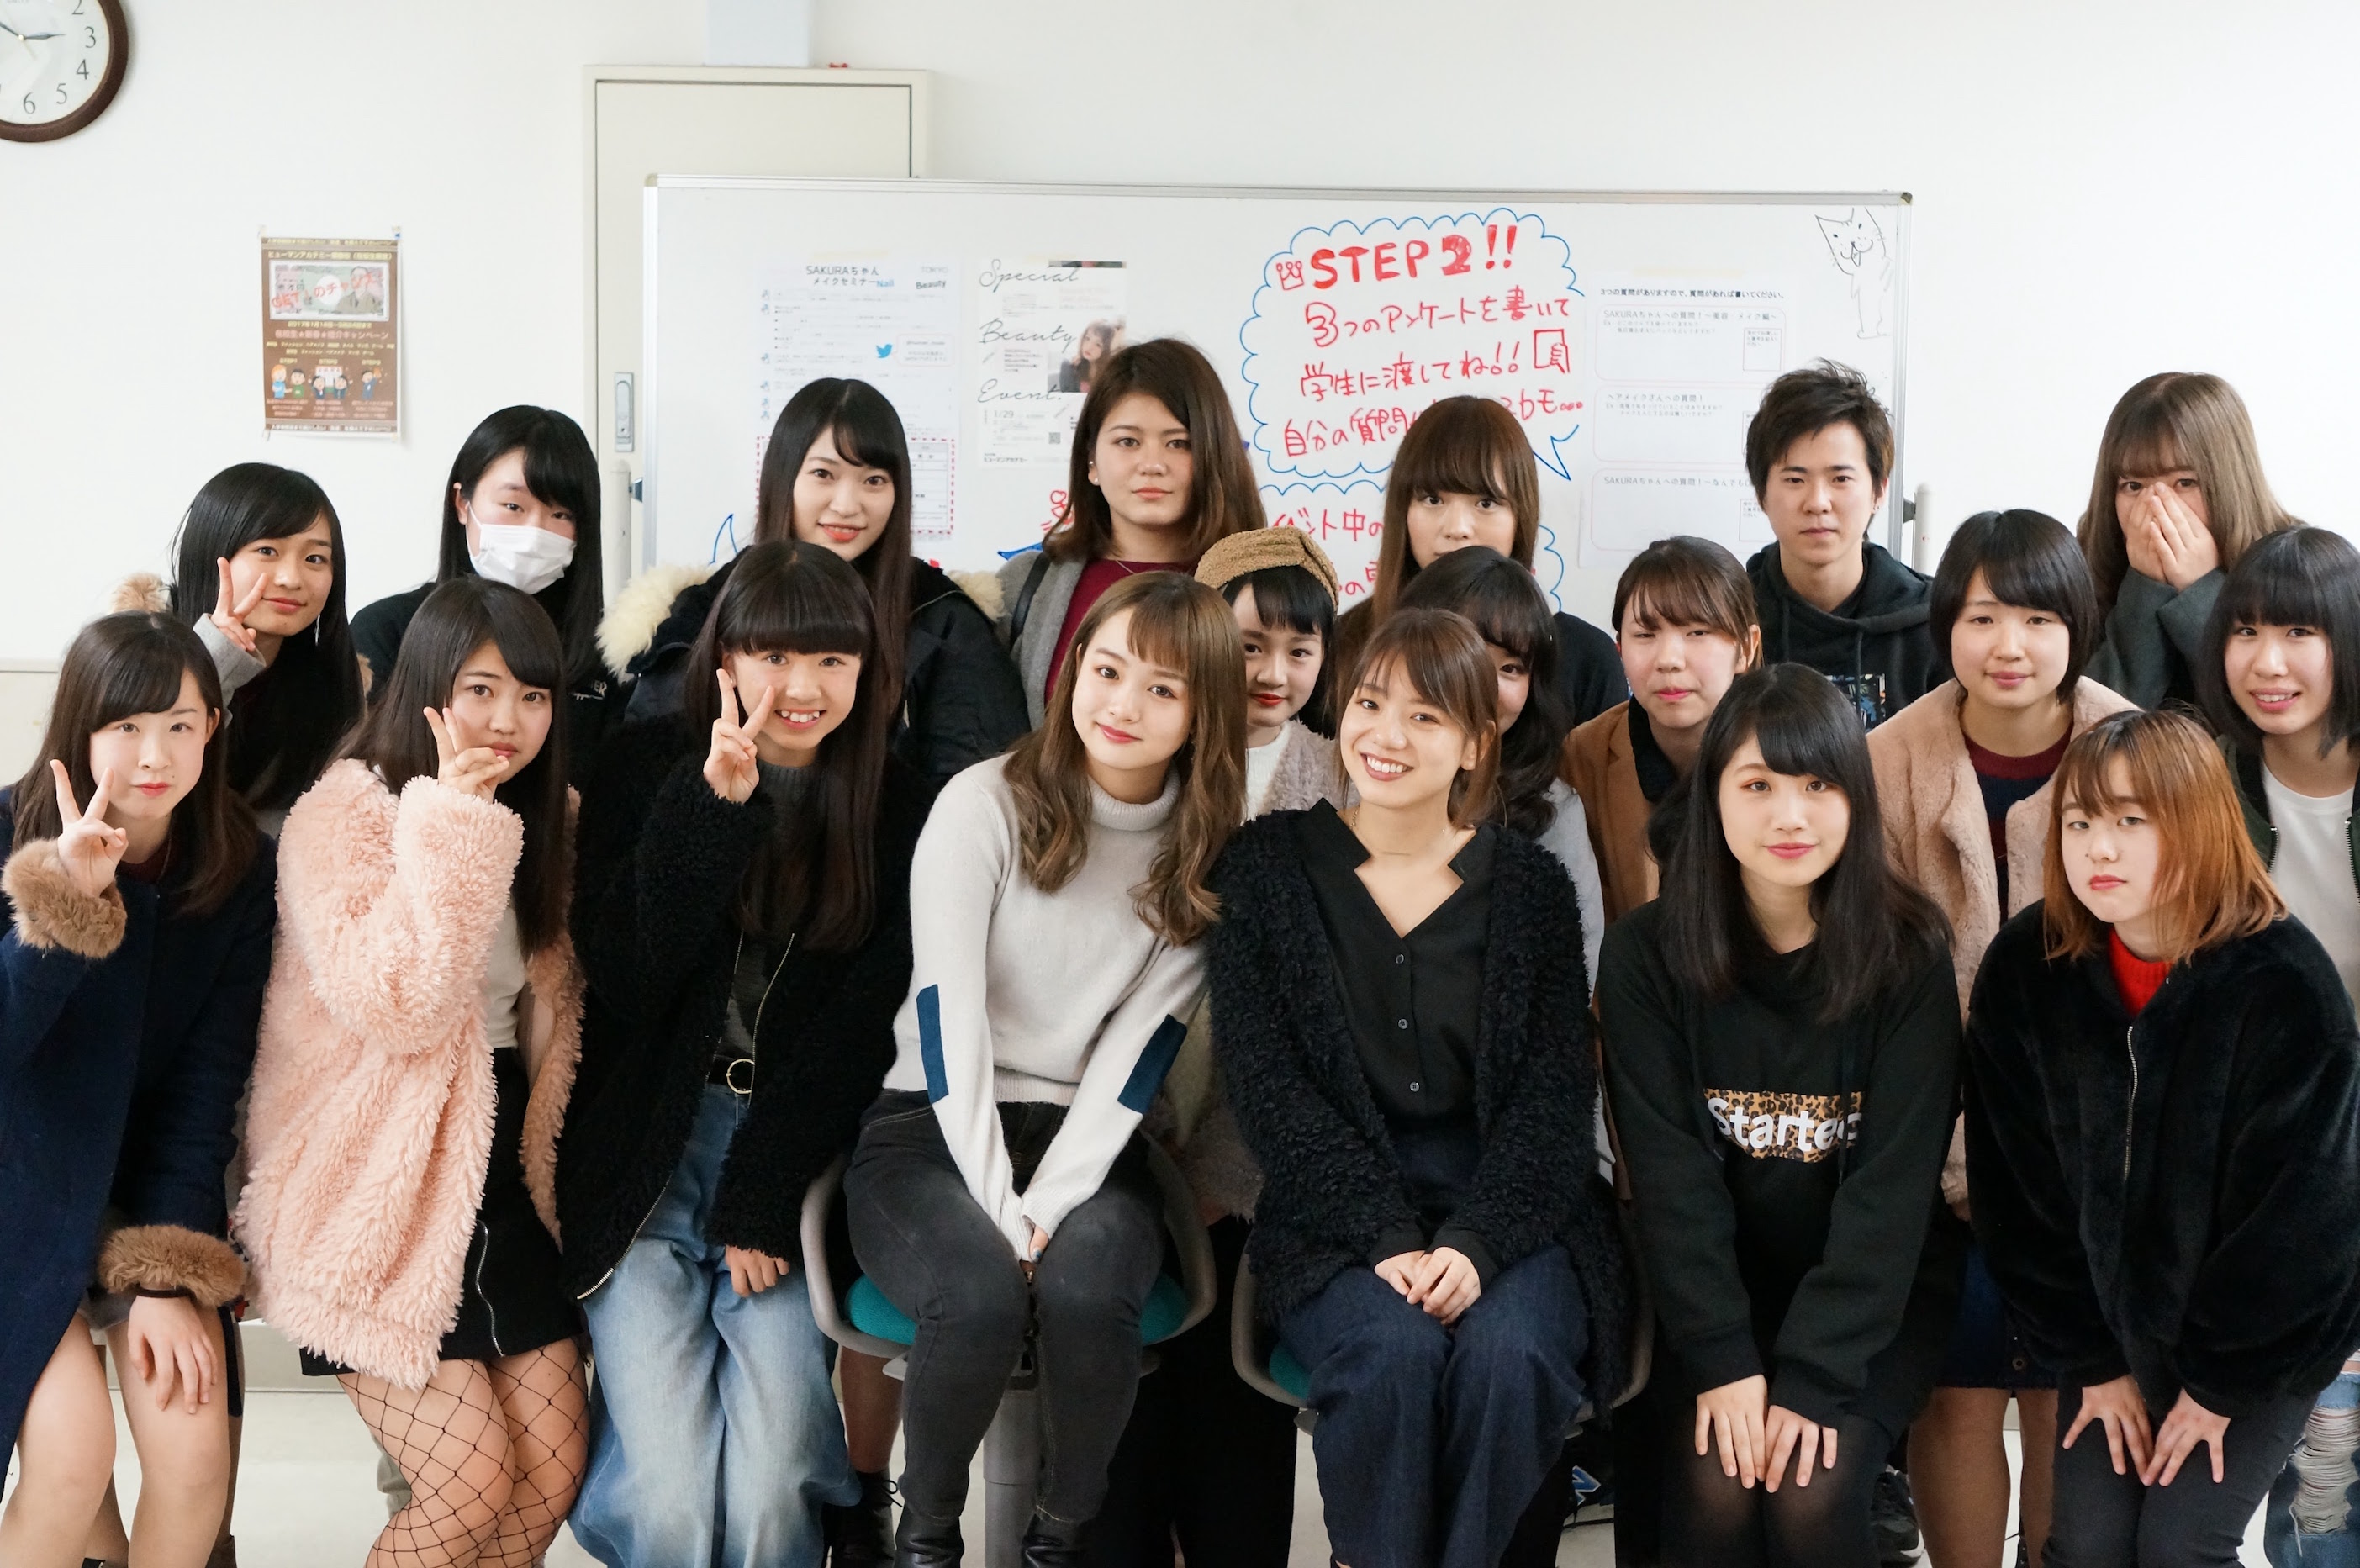 Ranzukiモデル Sakuraちゃん と担当ヘアメイクが来校 ヘアメイク 美容学校 服飾専門の学校 総合学園ヒューマンアカデミー